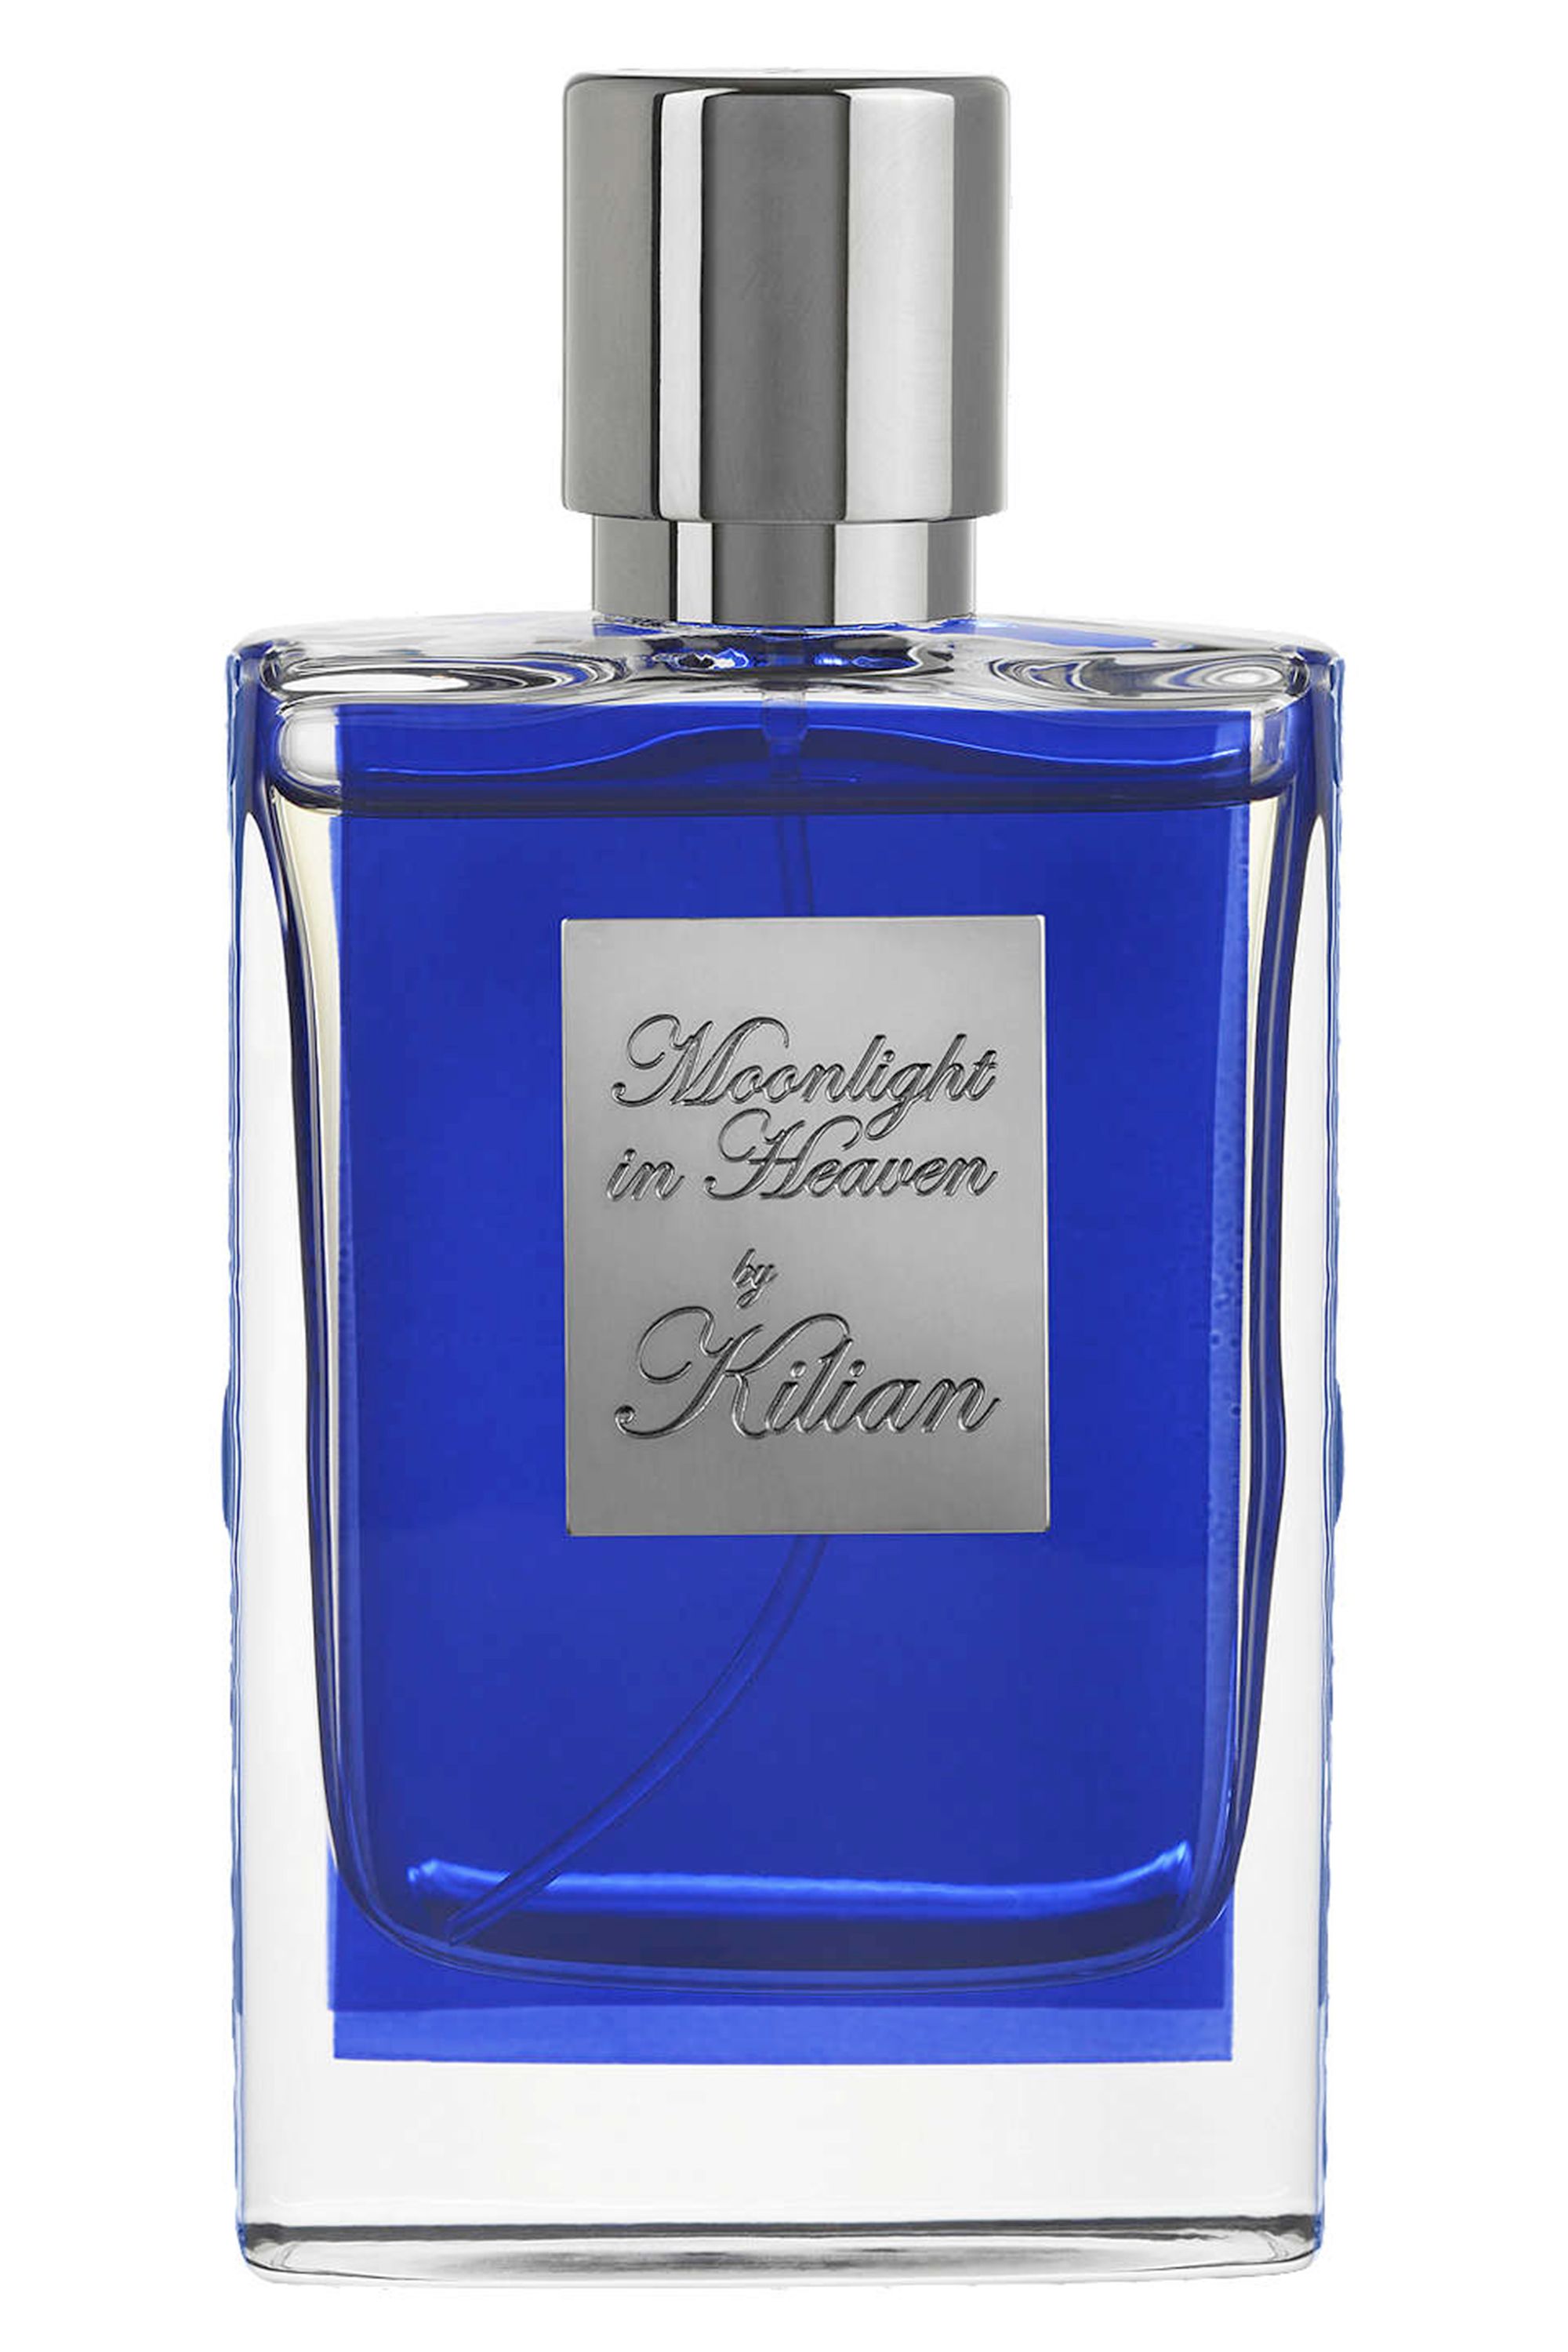 blue bottle womens perfume